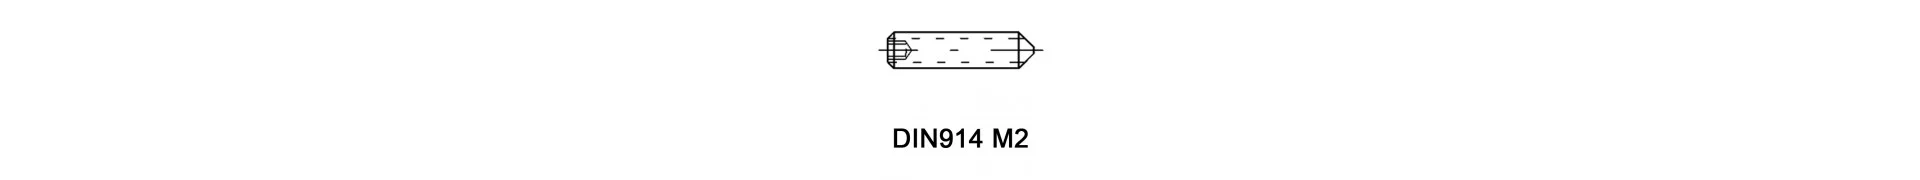 DIN914 M2